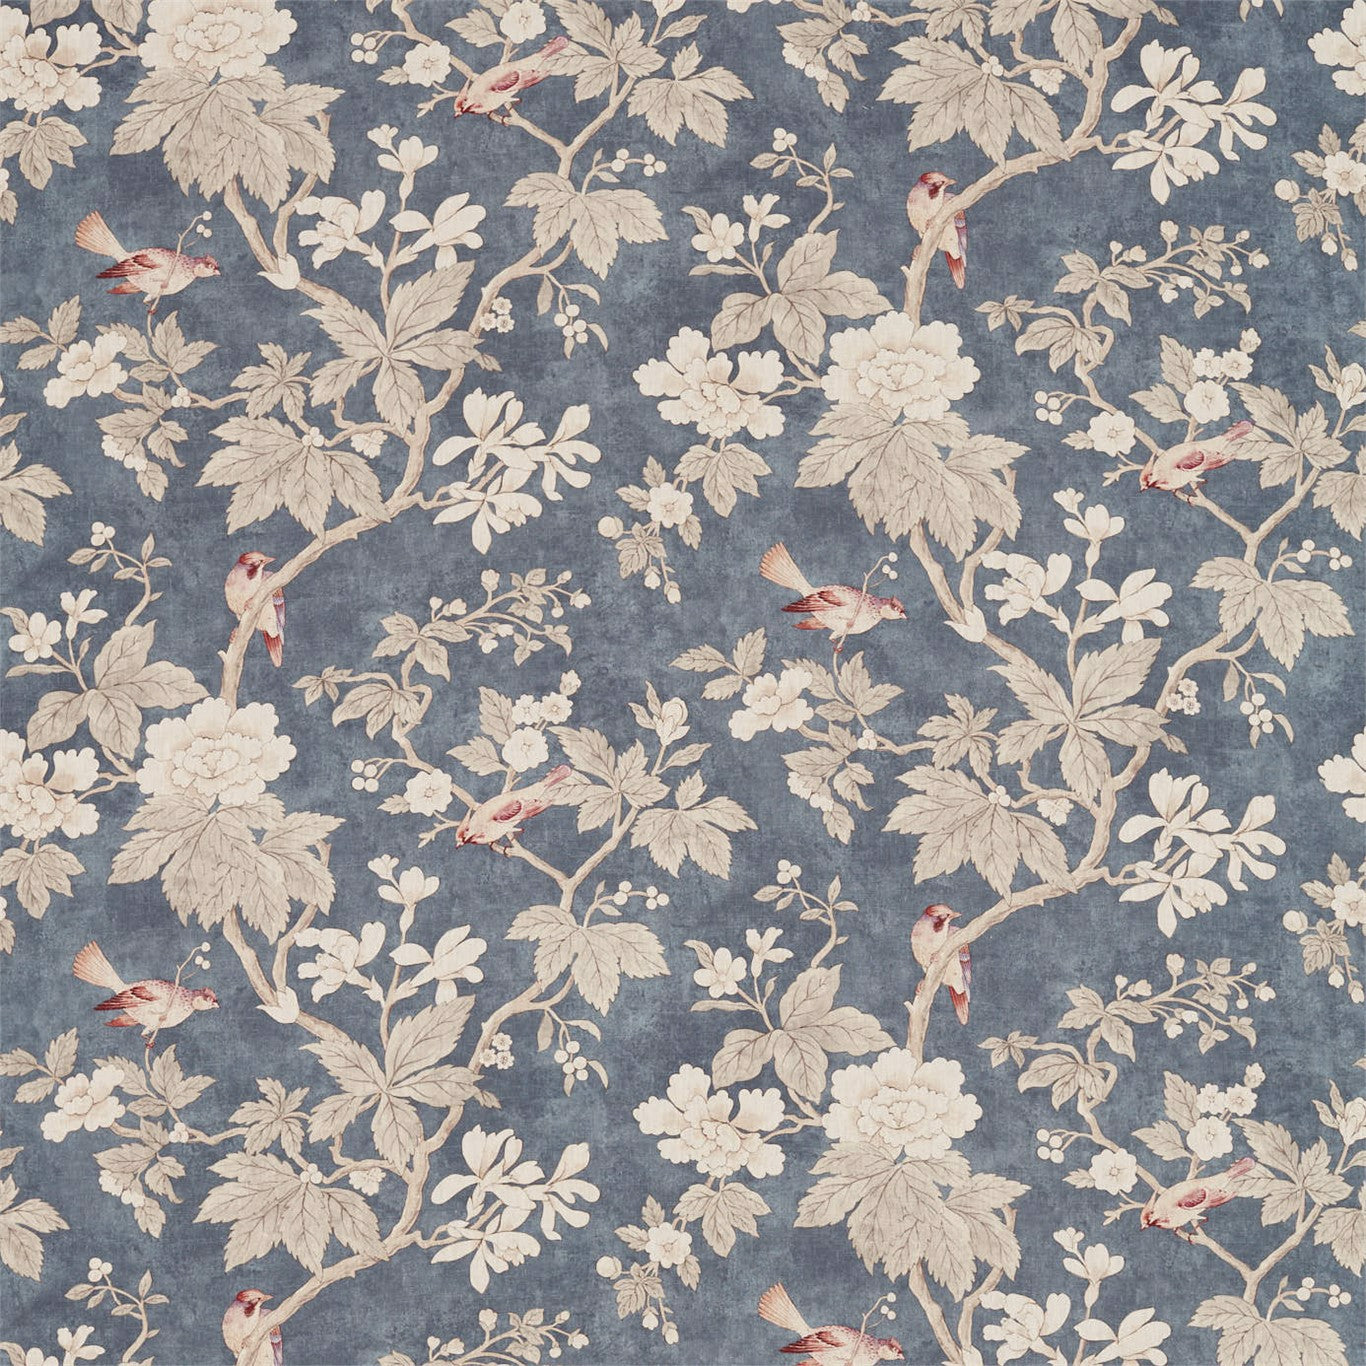 Chiswick Grove Fabric by Sanderson - DDAM226371 - Indigo